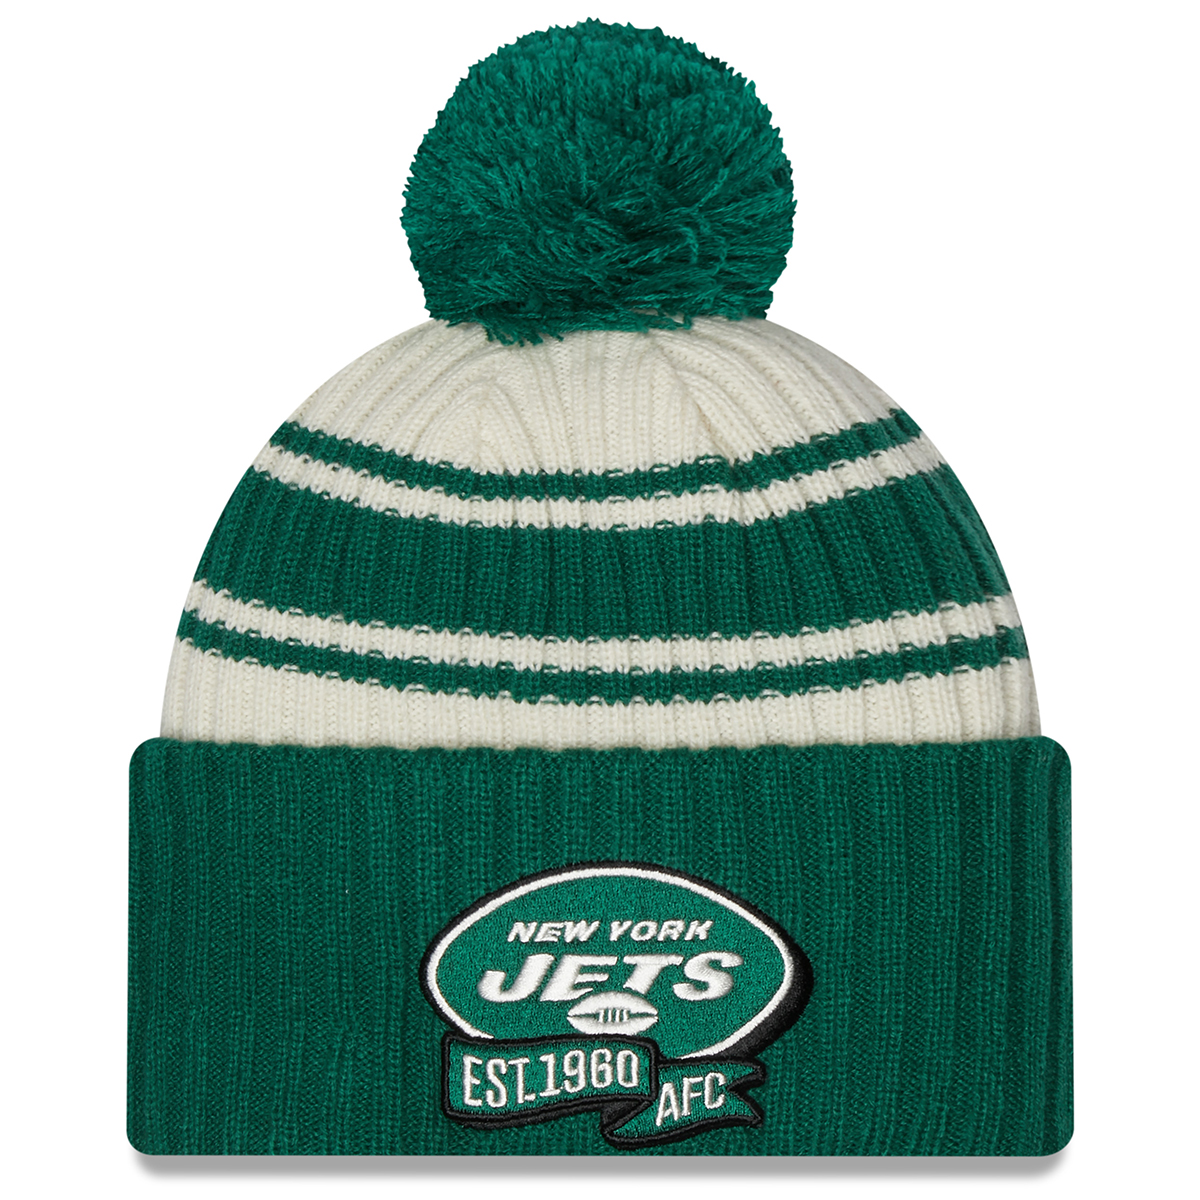 New York Jets New Era Sideline Cuff Knit Hat, Green